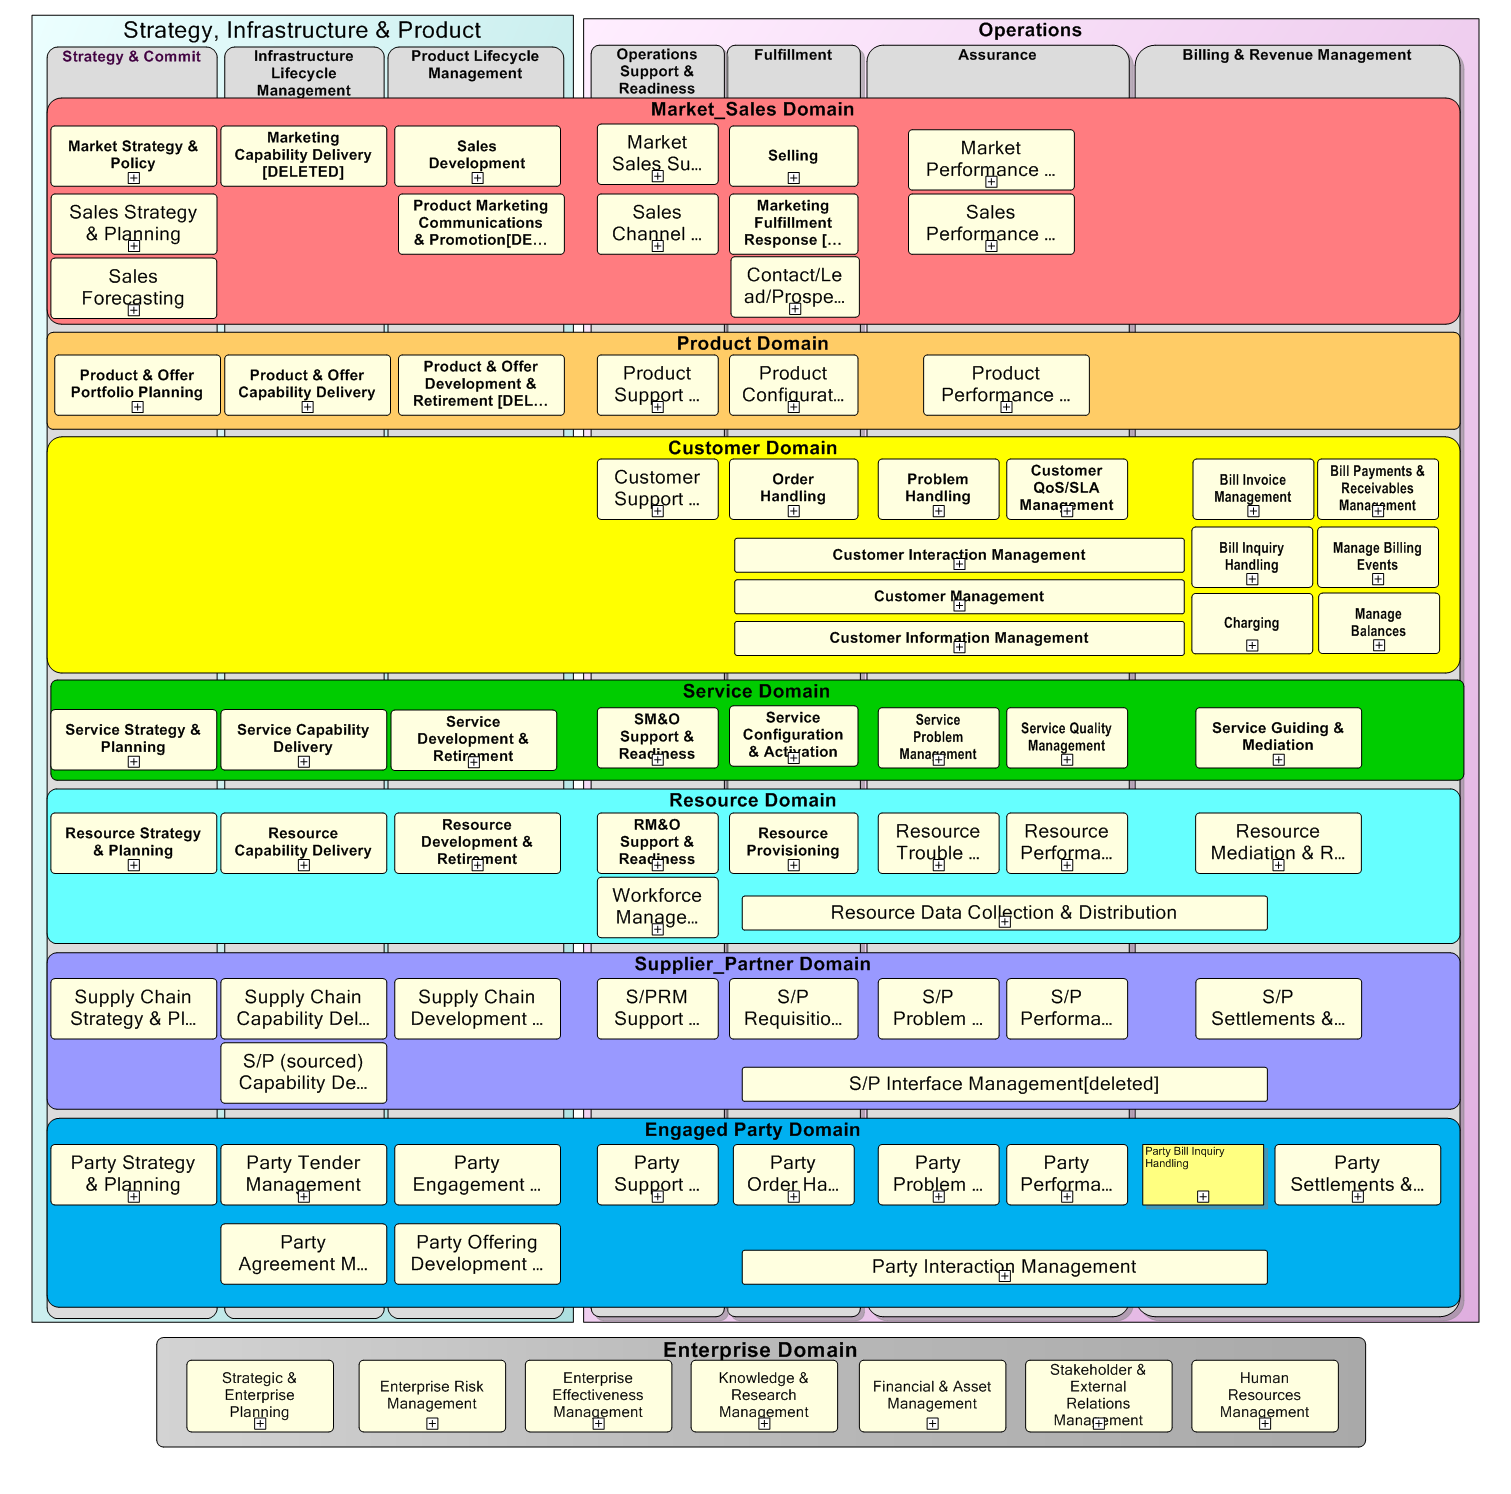 Business Process Framework Level 1 Overview - START HERE backup